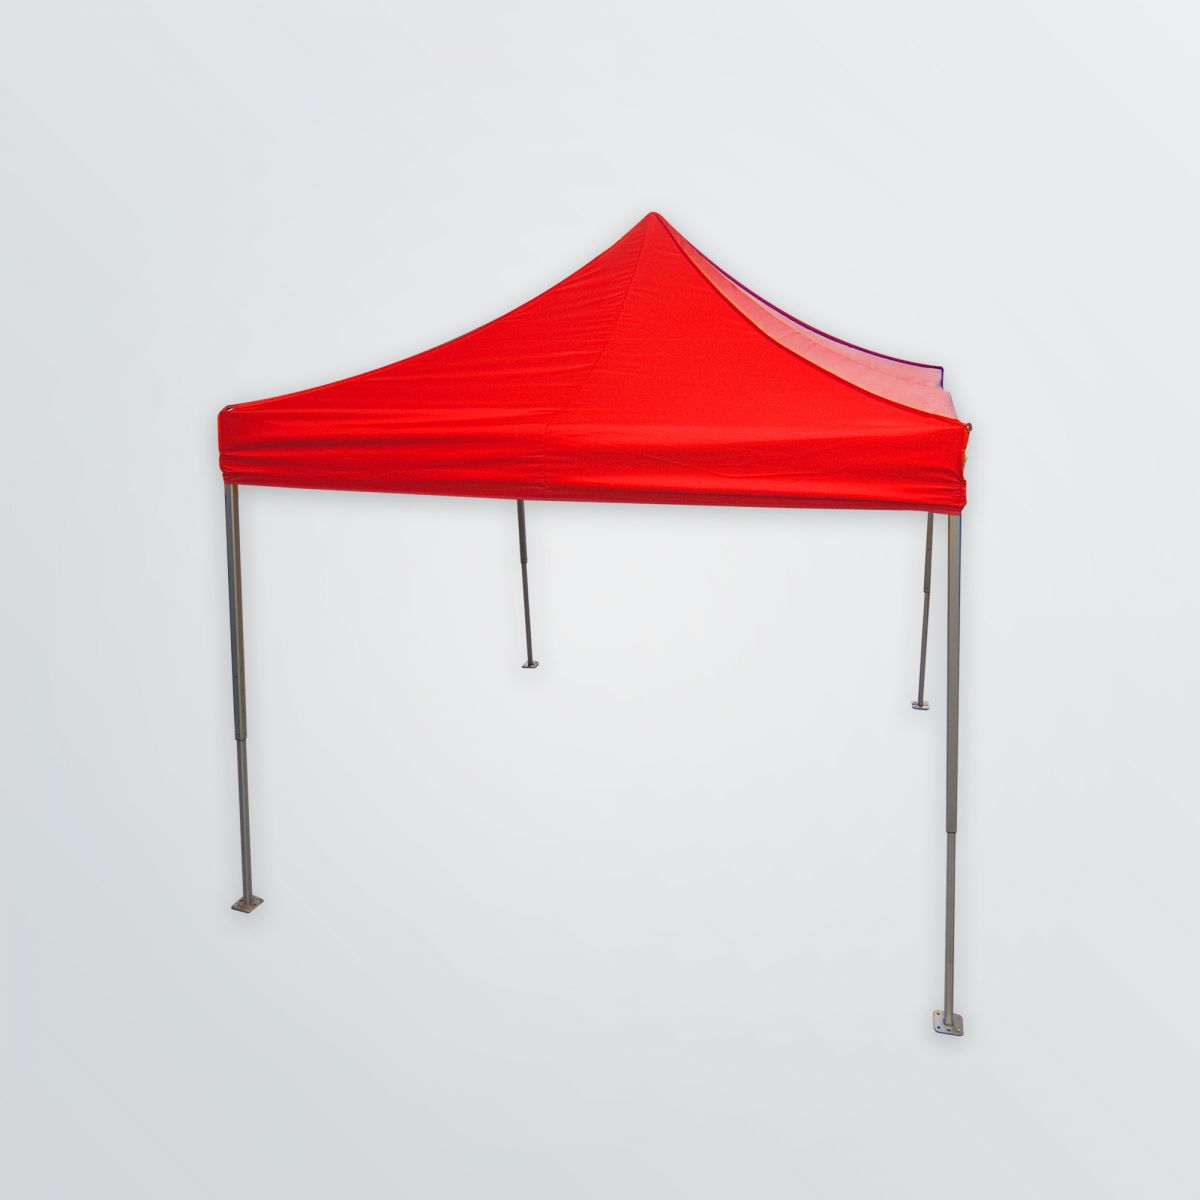 Aufgestelltes individualisierbares Zelt mit Faltgestell aus Aluminium in der Farbe rot